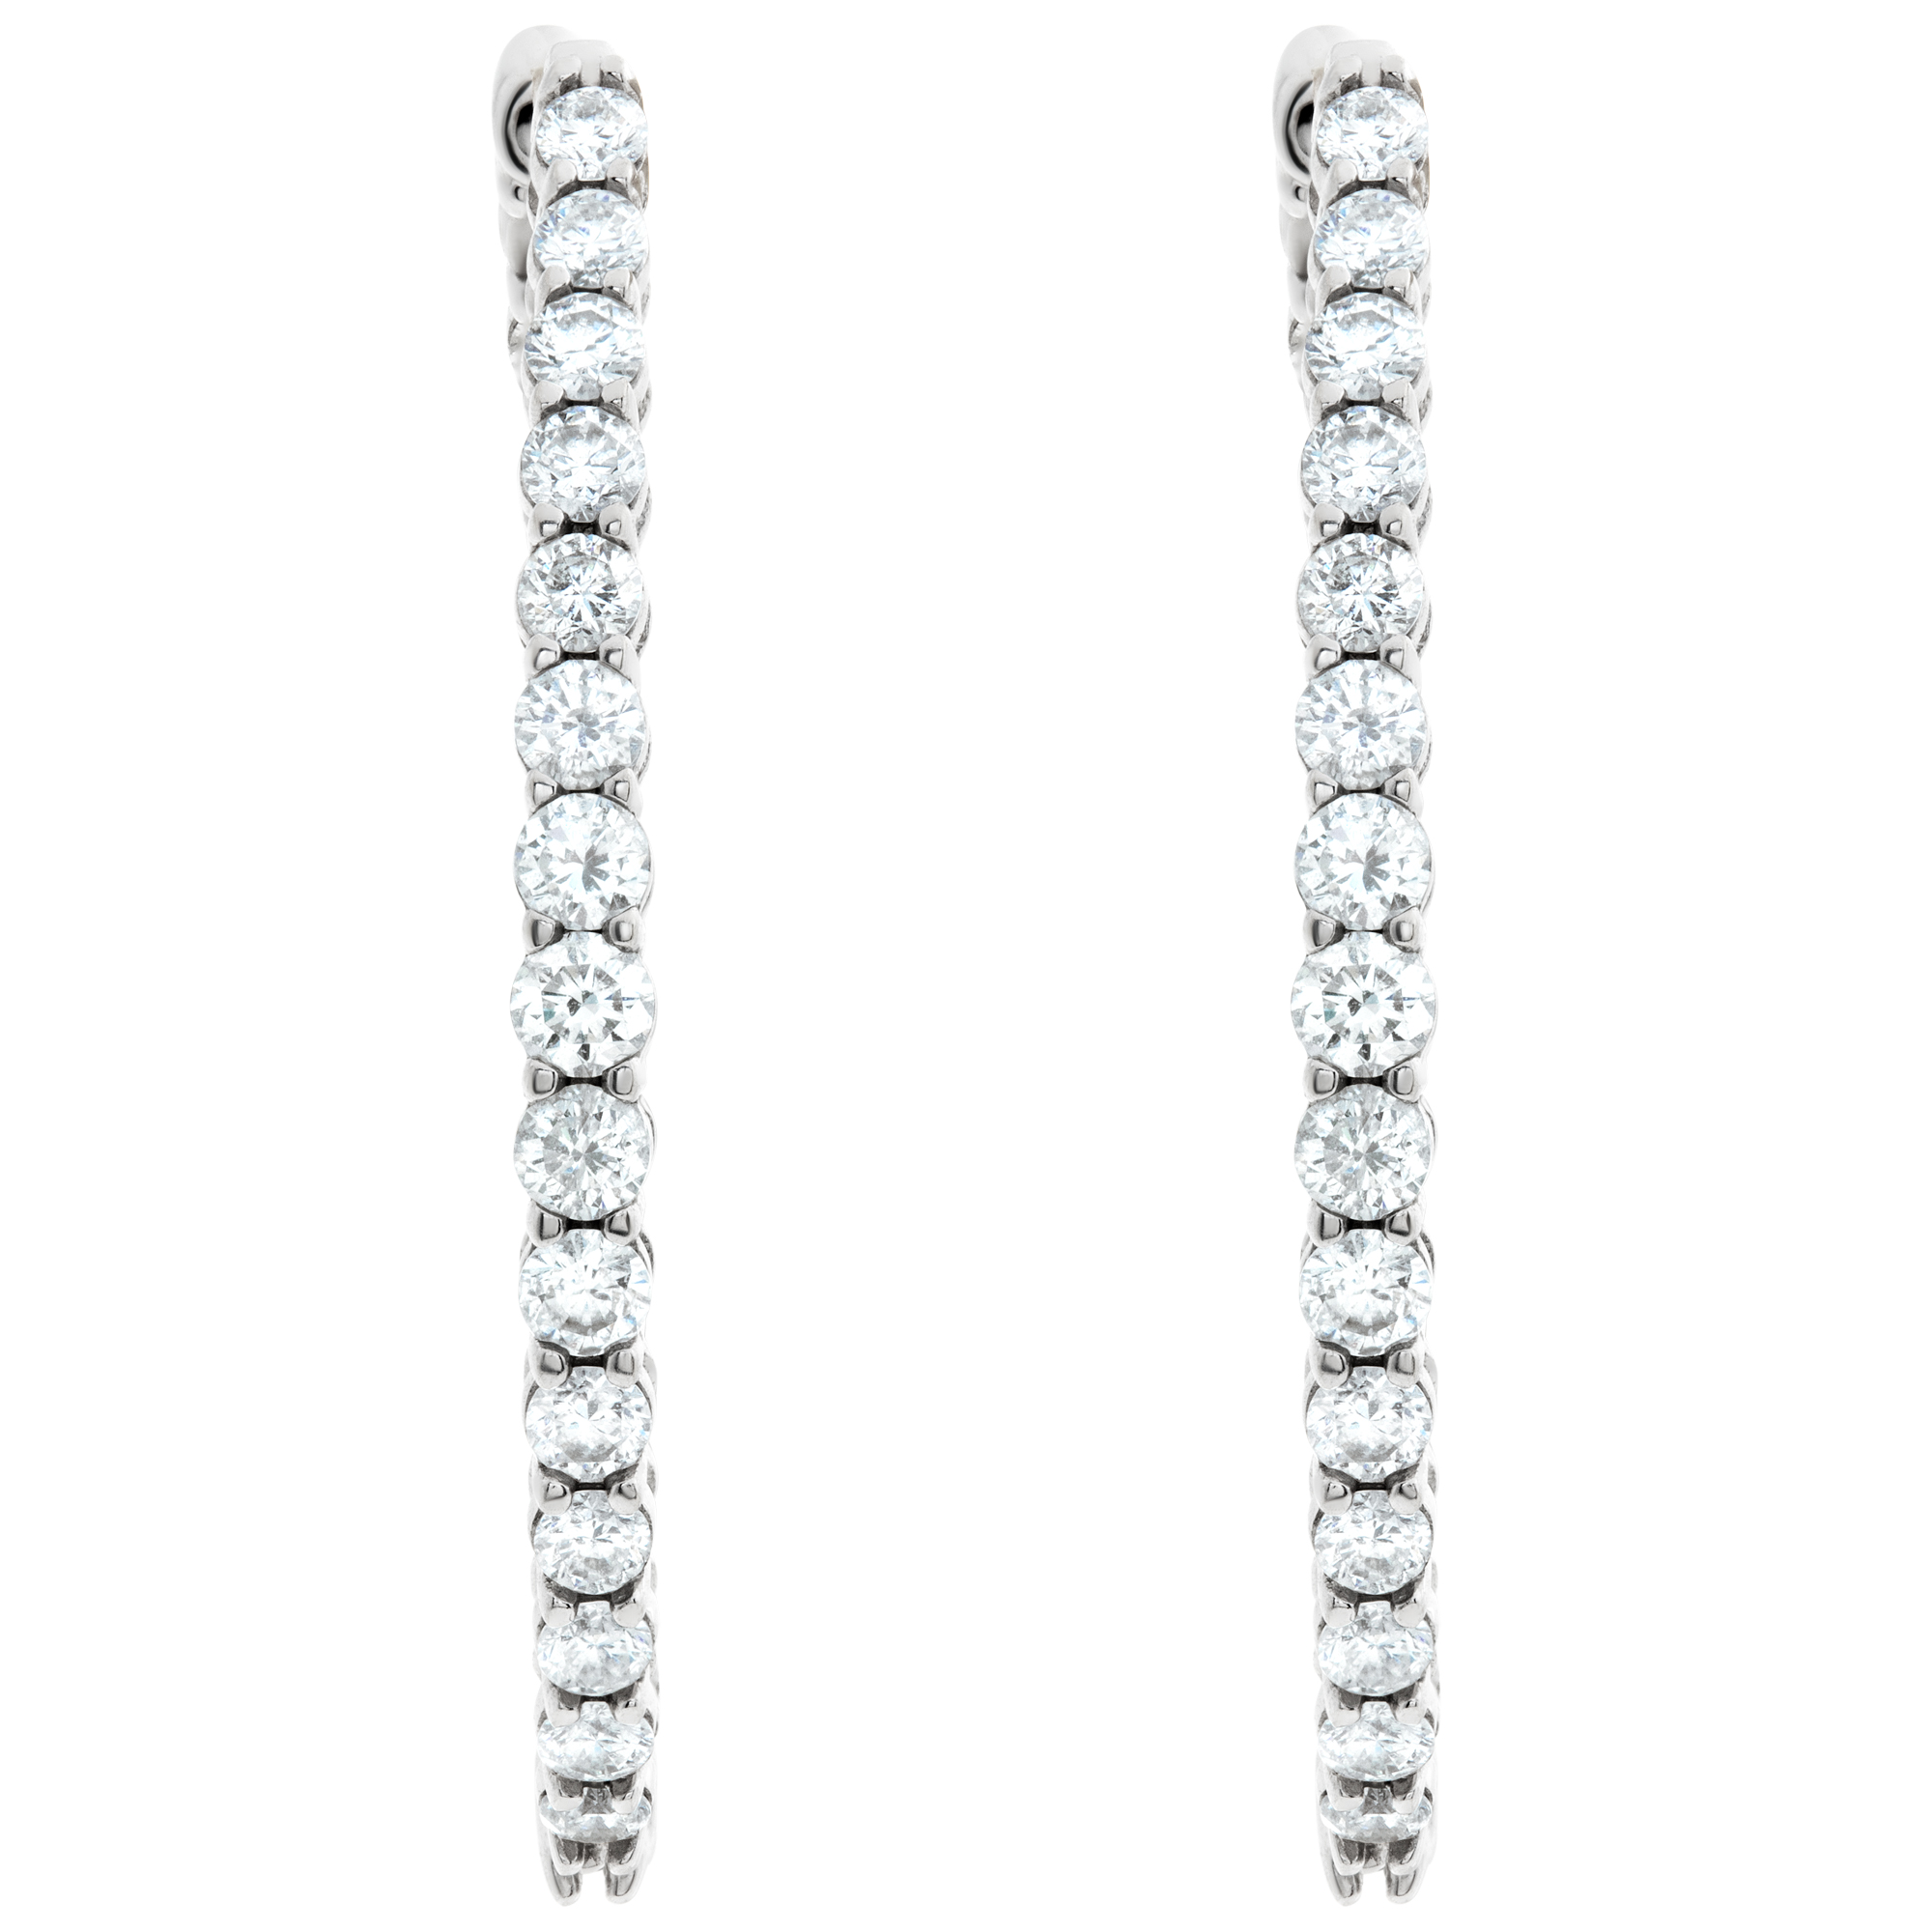 Diamond oval hoop earrings in 14k white gold with 2 carats in diamonds